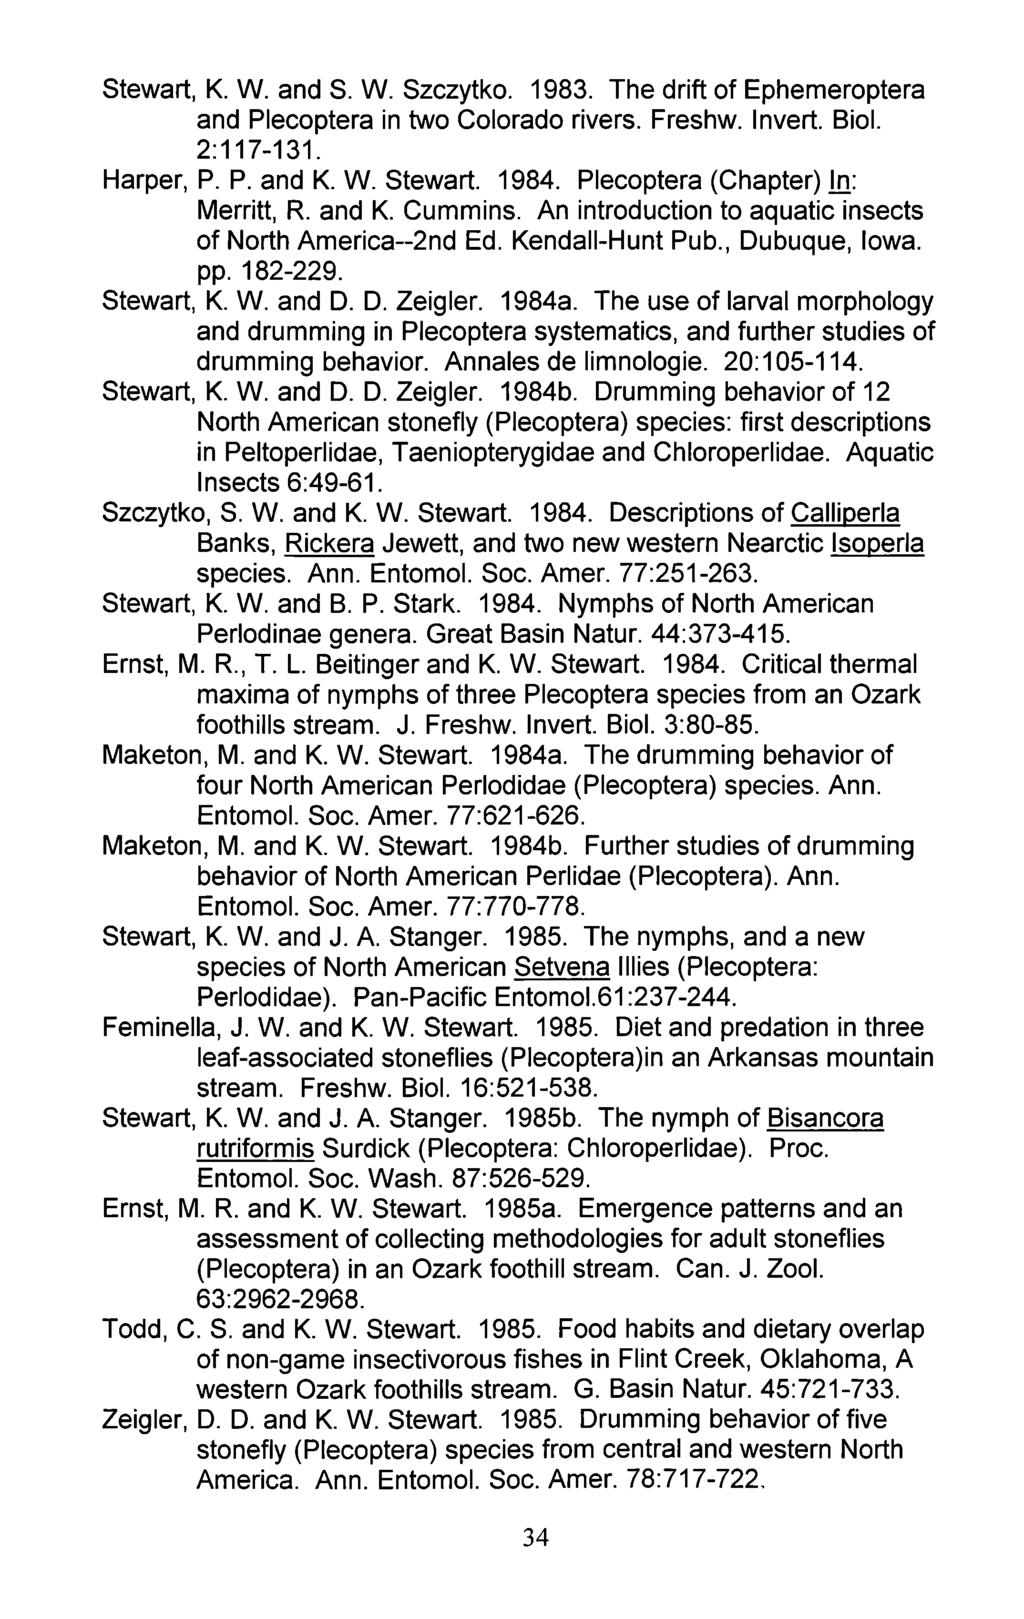 Stewart, K. W. and S. W. Szczytko. 1983. The drift of Ephemeroptera and Plecoptera in two Colorado rivers. Freshw. Invert. Biol. 2:117-131. Harper, P. P. and K. W. Stewart. 1984.